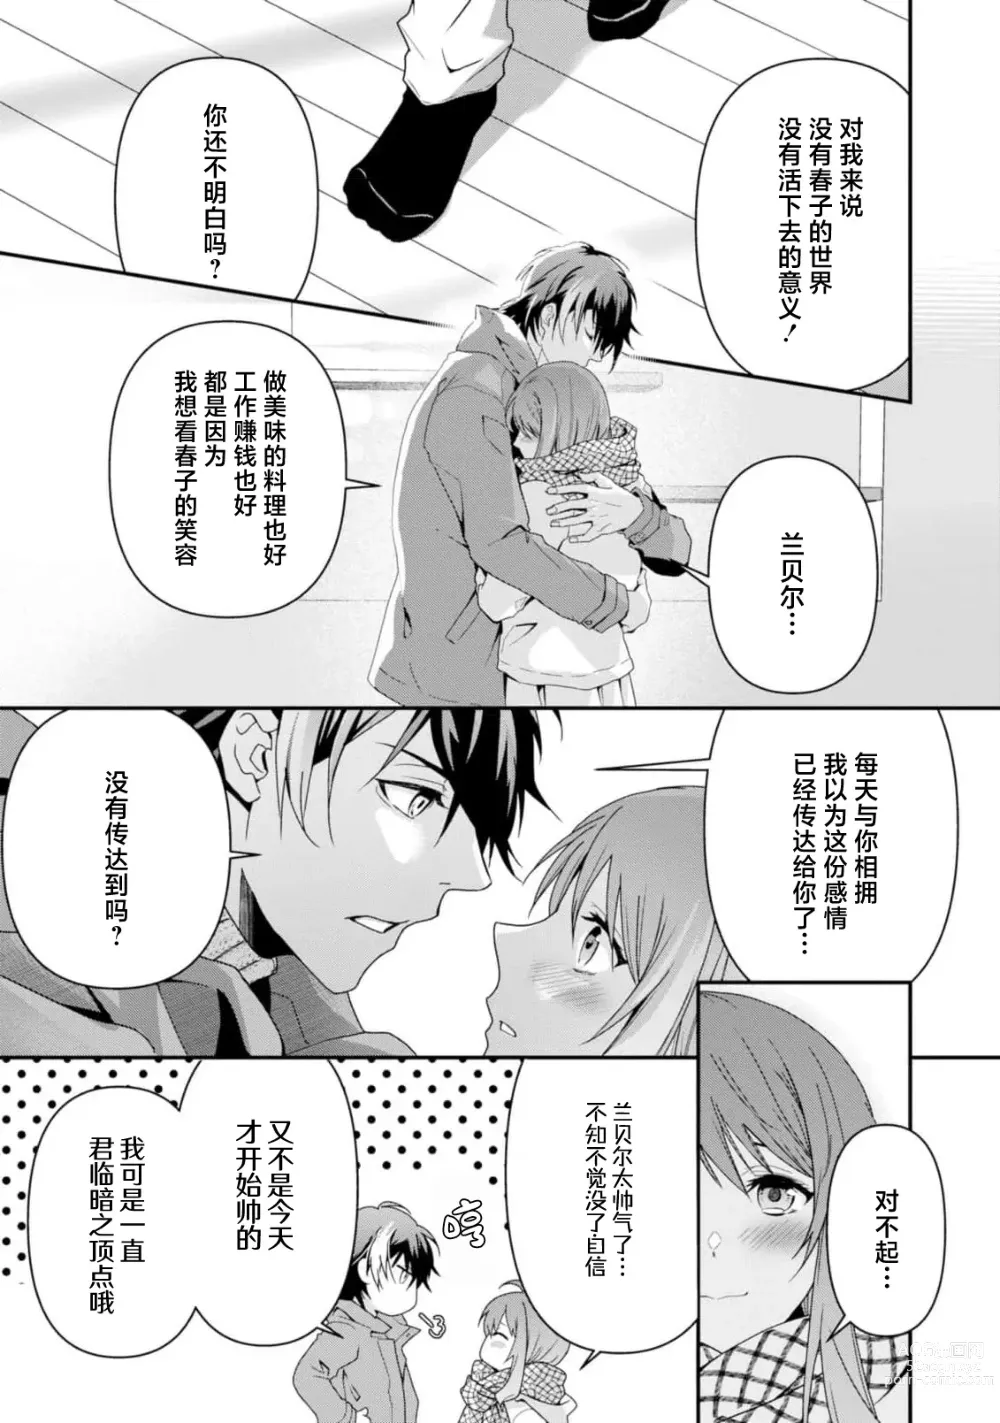 Page 267 of manga 最终BOSS转生而来，因此拿下了他的童贞 1-9 end